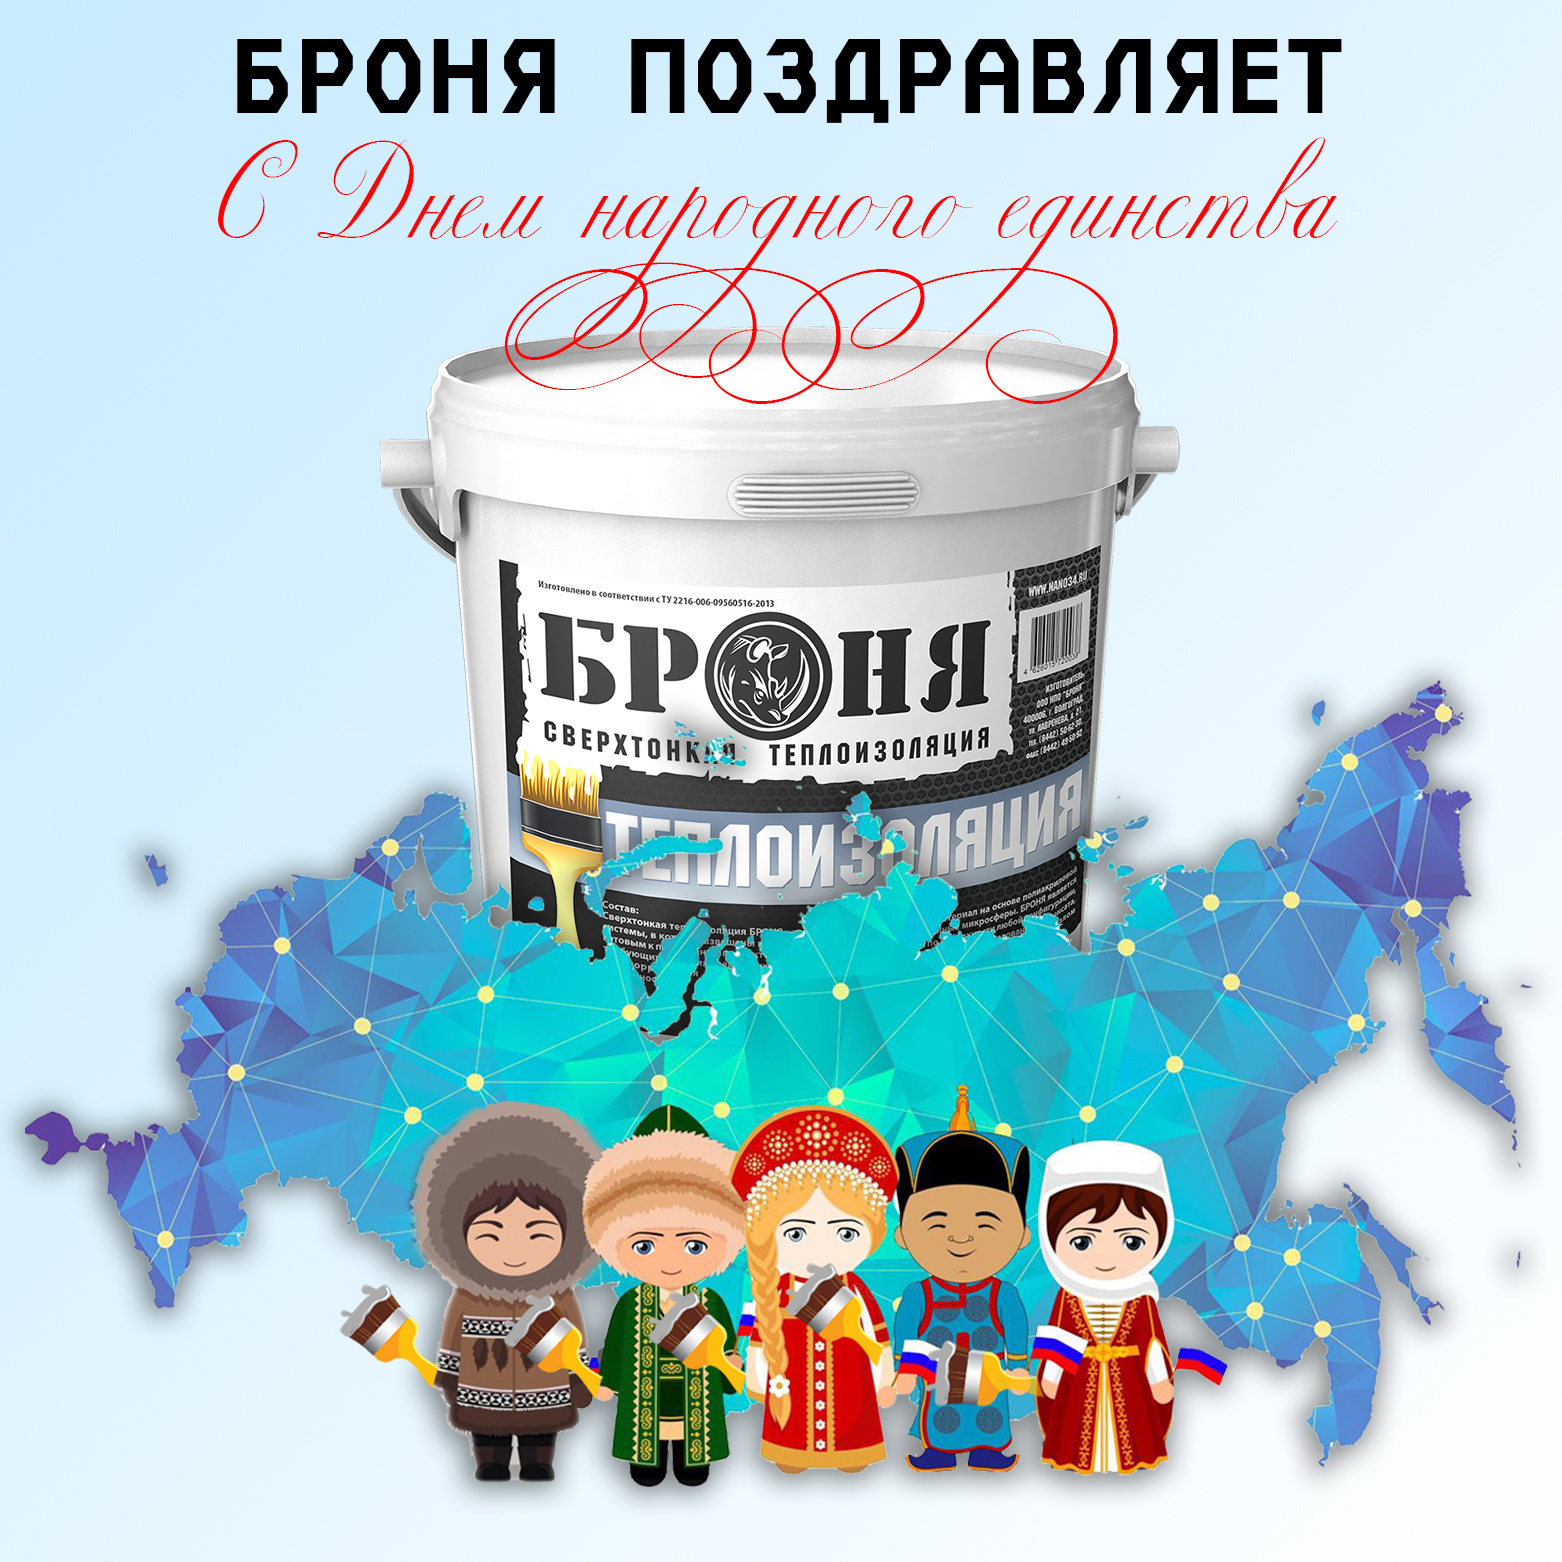 The company Bronya congratulates on the National Unity Day!